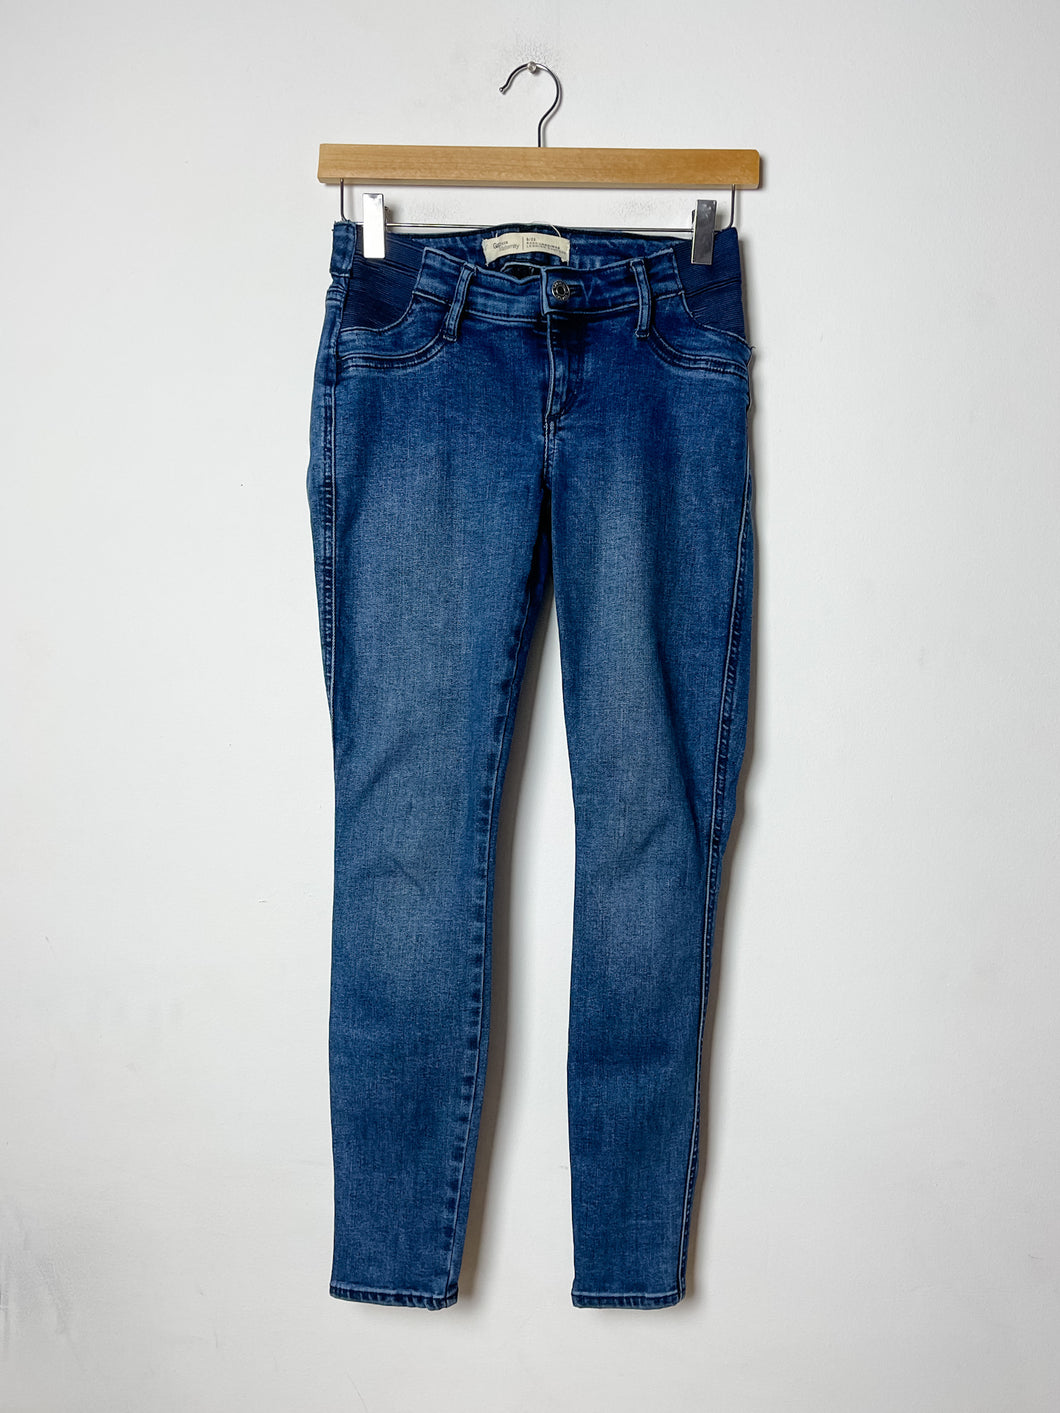 Maternity Blue Gap Jeans Size 0/ 25